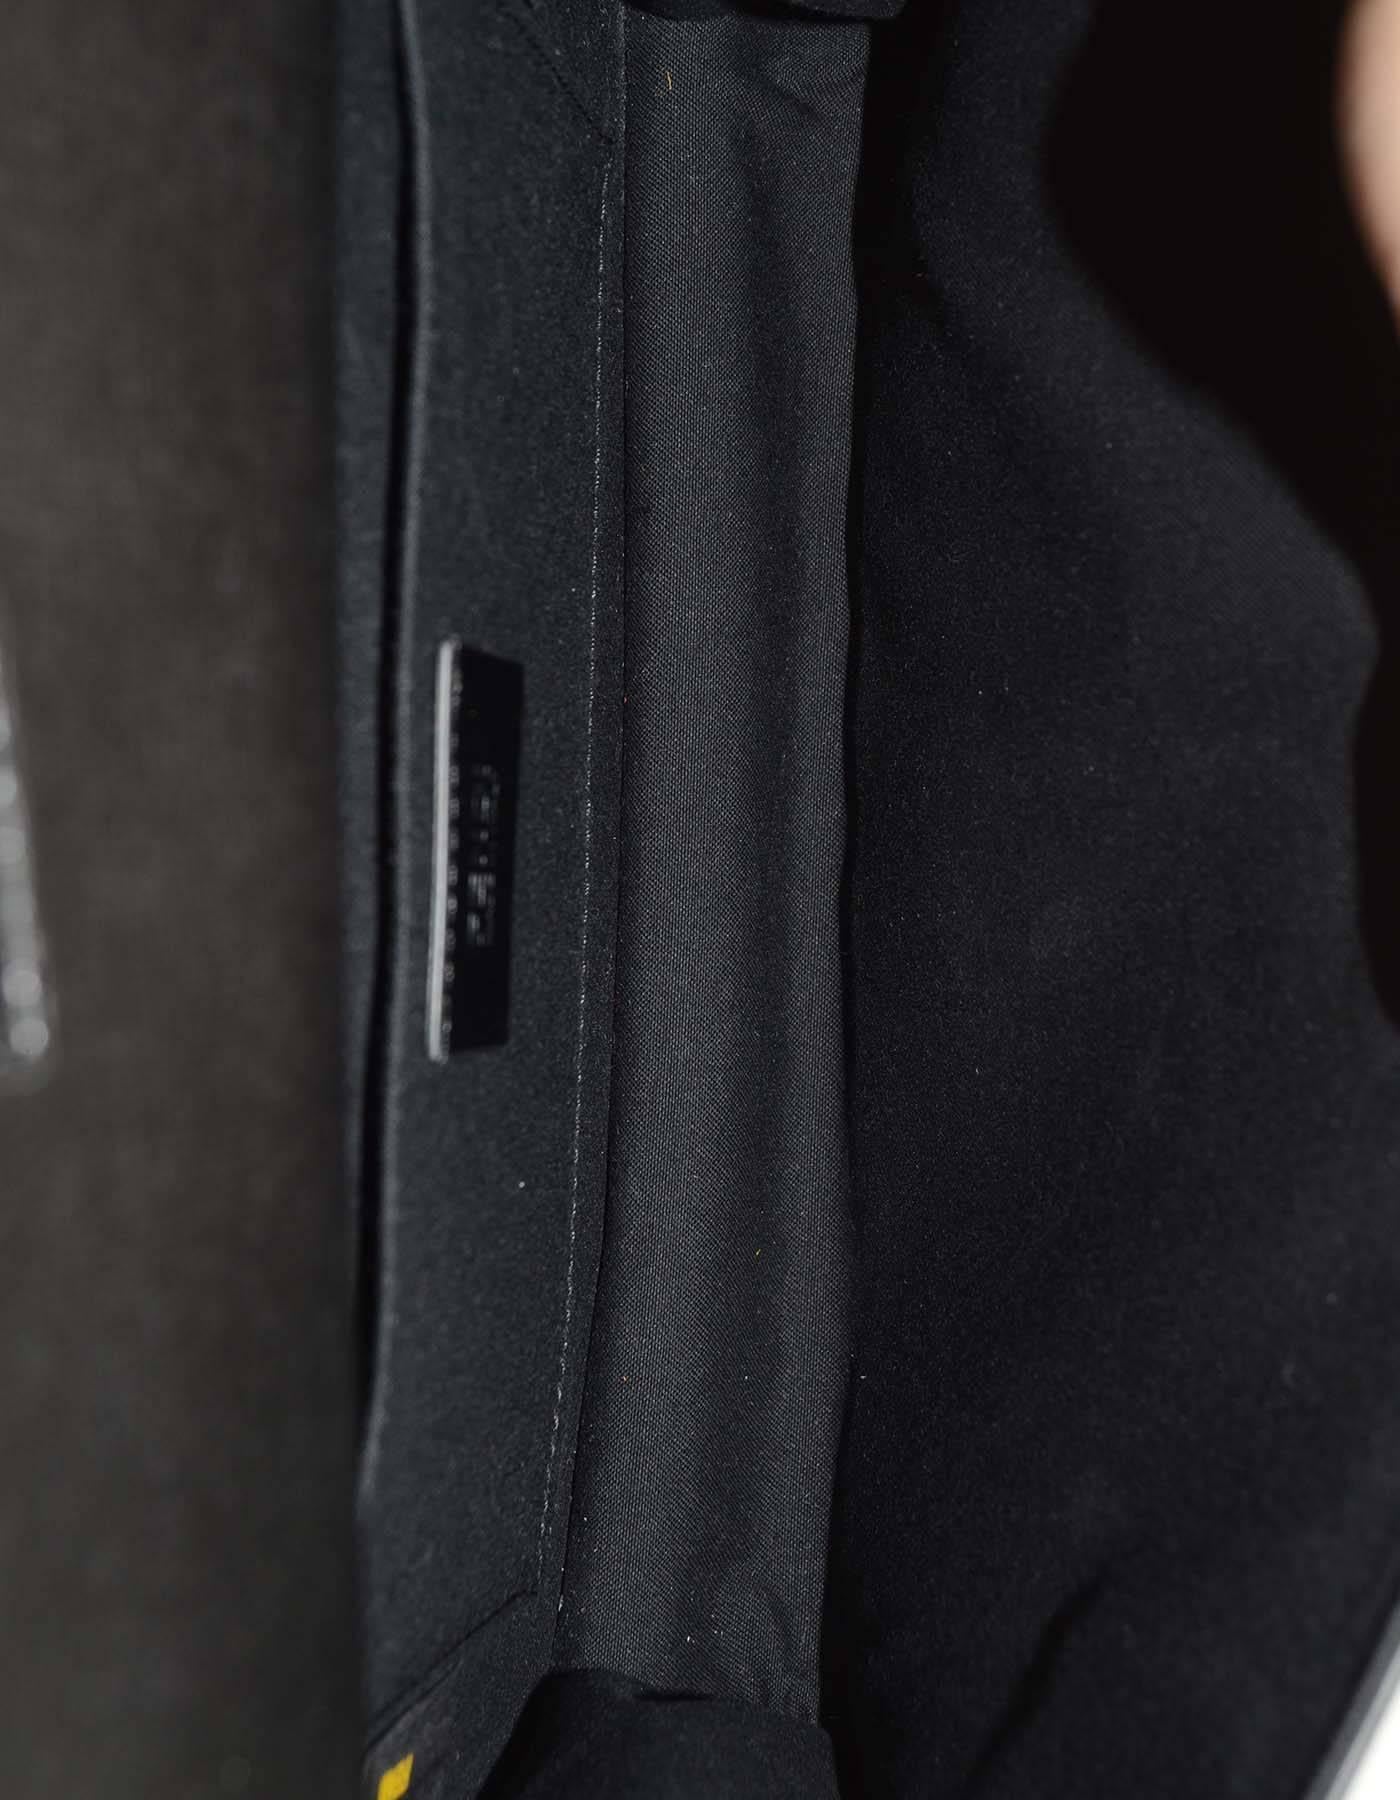 Fendi Black & Silver Textured Leather 'Demijours' Bag SHW rt. $2, 025 2